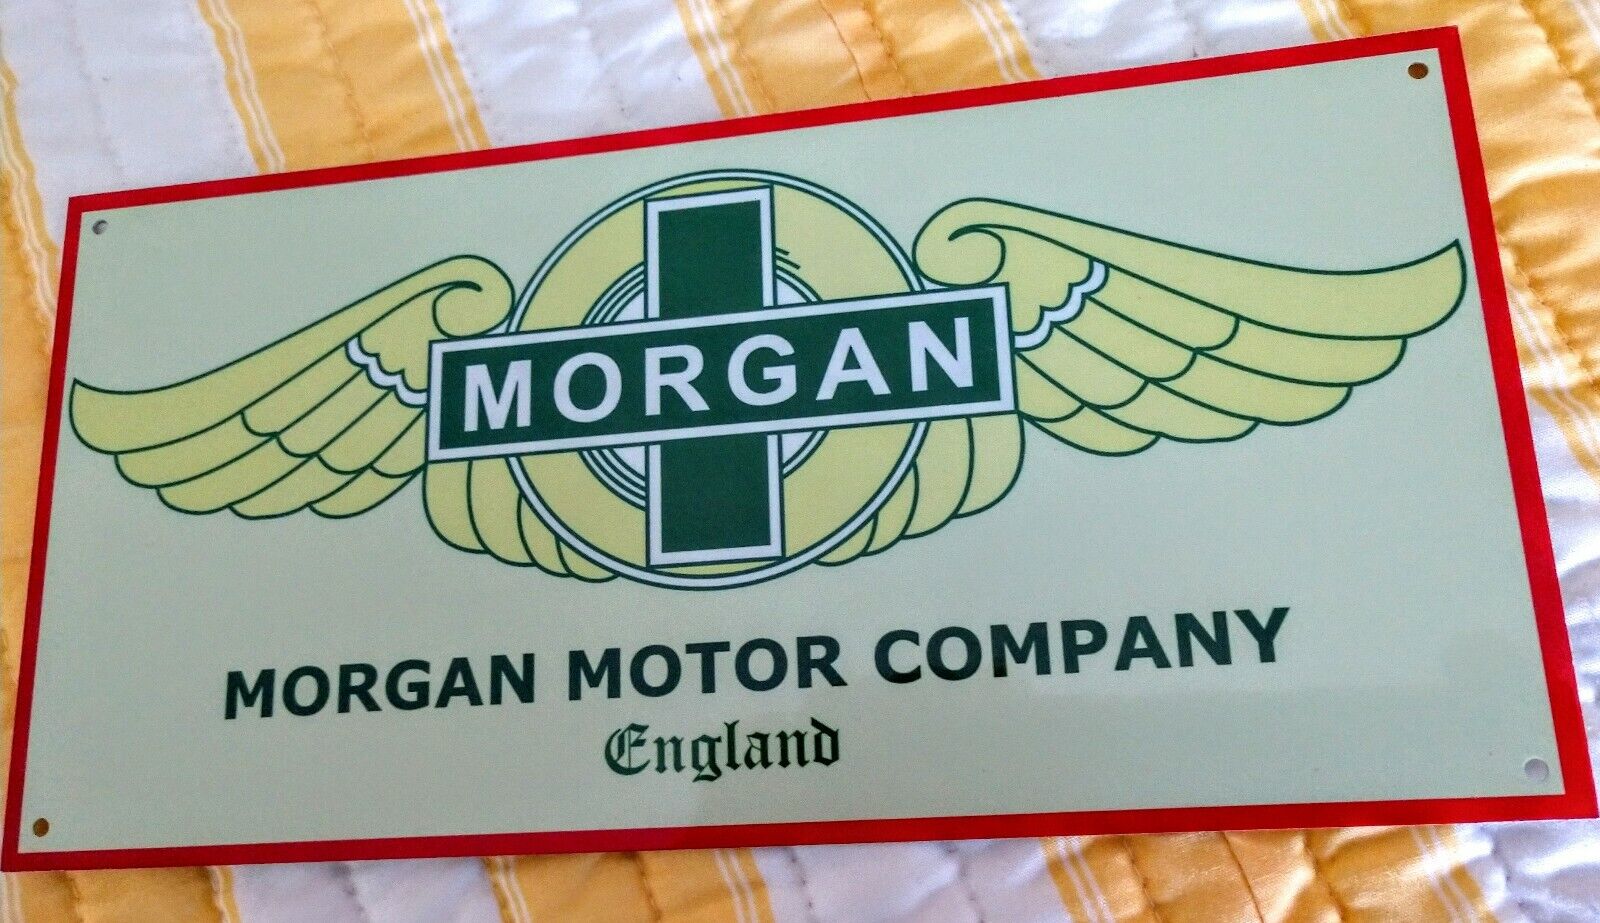 Morgan Motor Company England sign